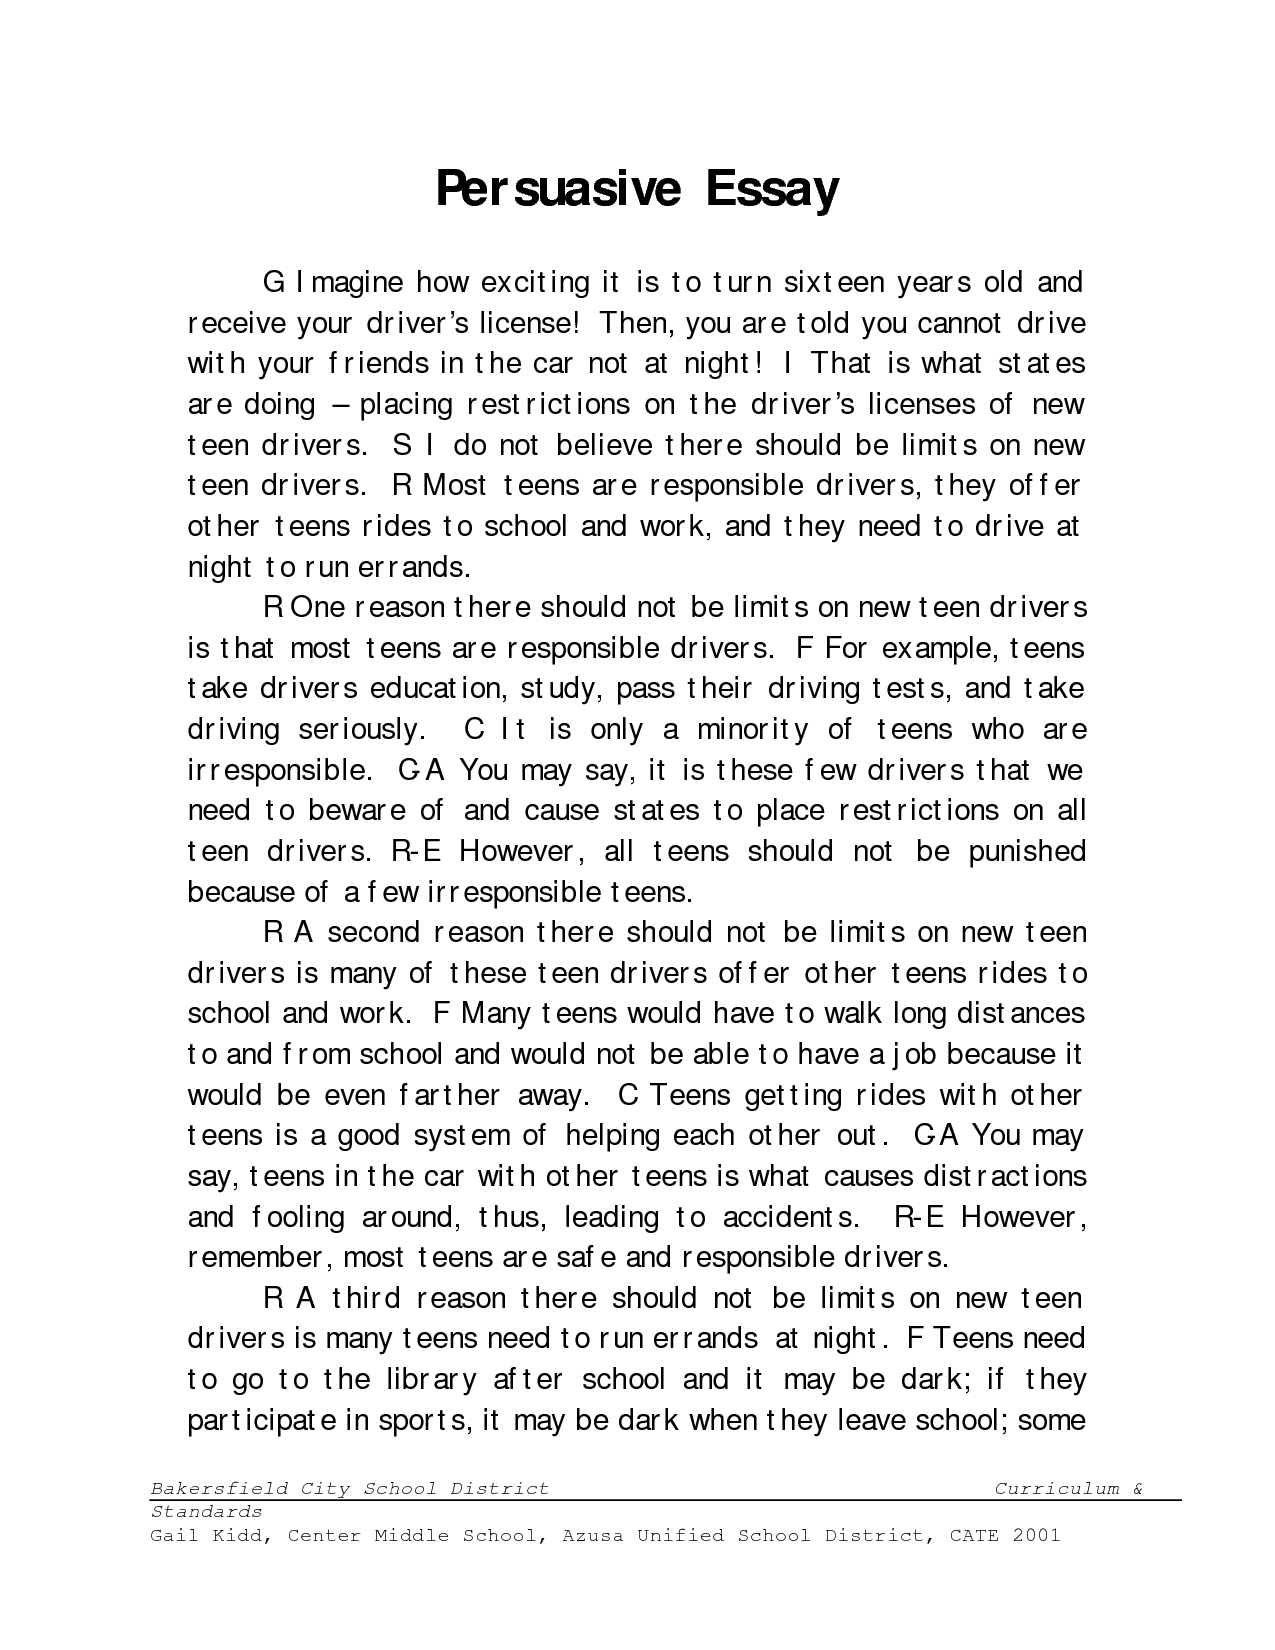 Persuasive essay middle school